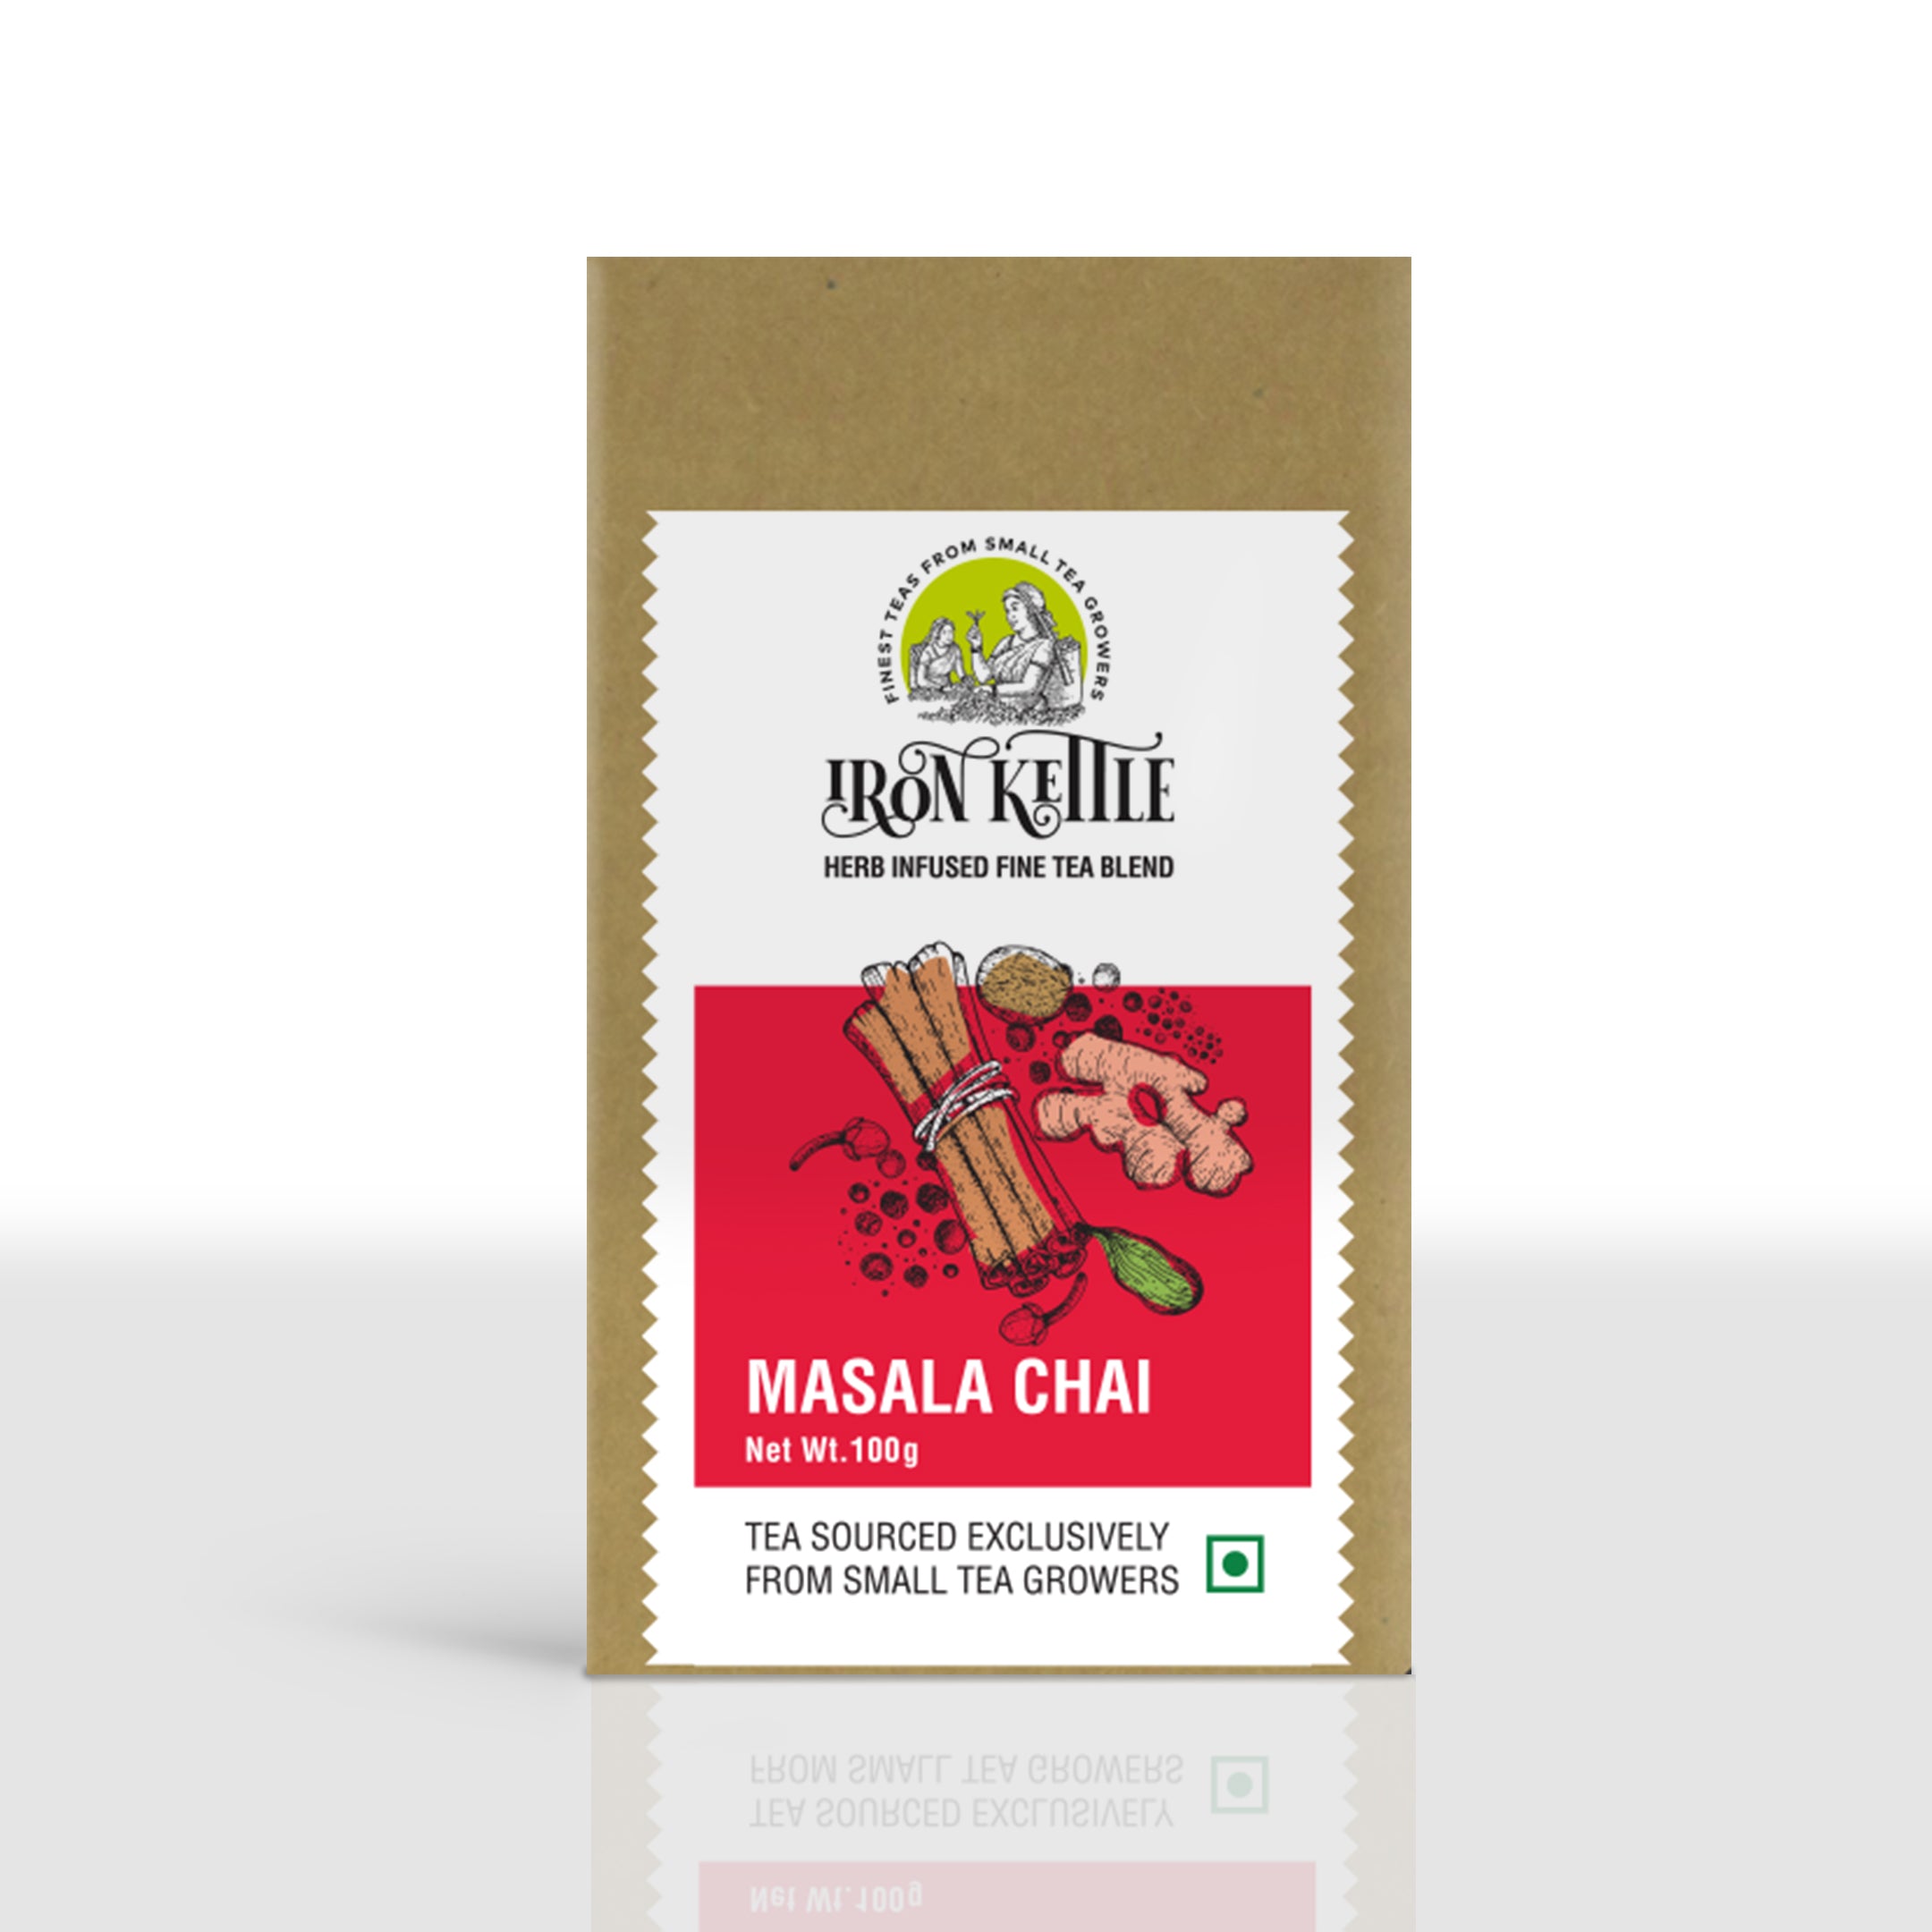 Masala Chai - Iron Kettle Tea